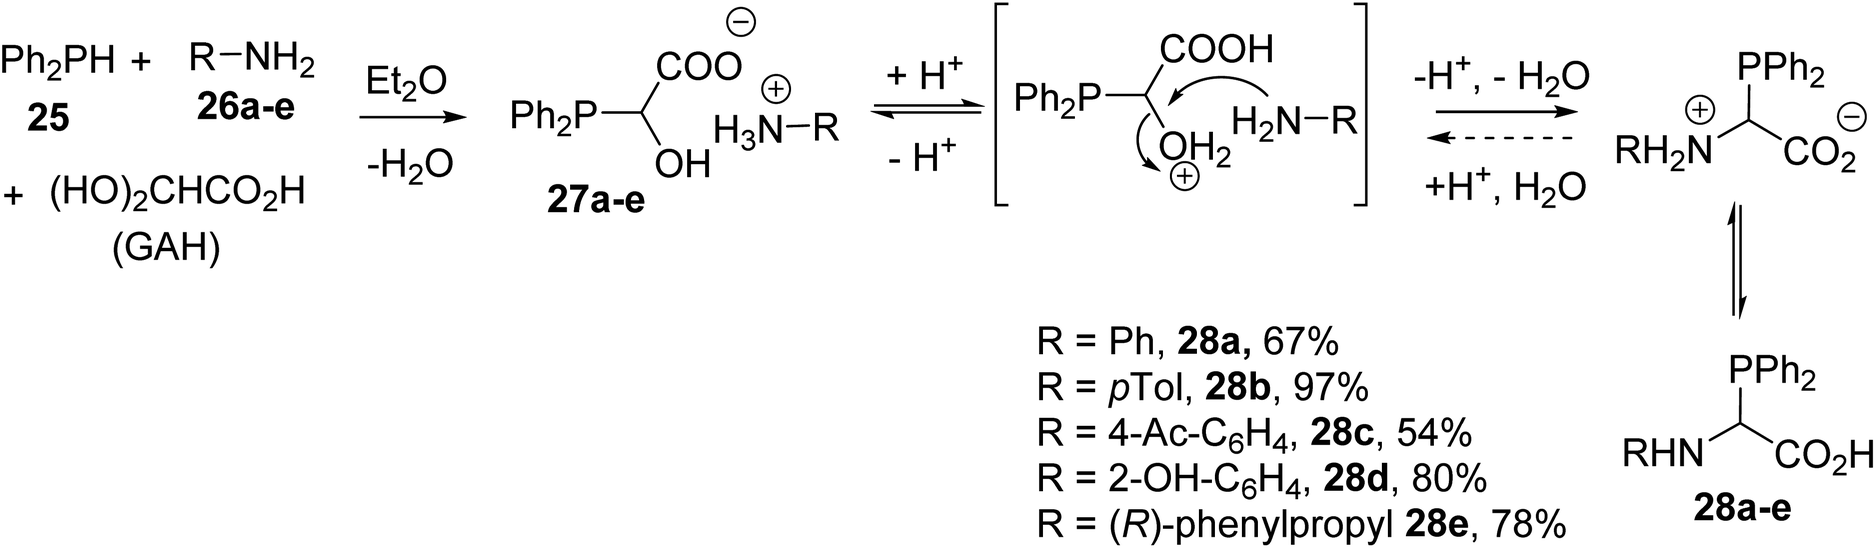 Phosphorus Containing Amino Acids With A P C Bond In The Side Chain Or A P O P S Or P N Bond From Synthesis To Applications Rsc Advances Rsc Publishing Doi 10 1039 C9raj